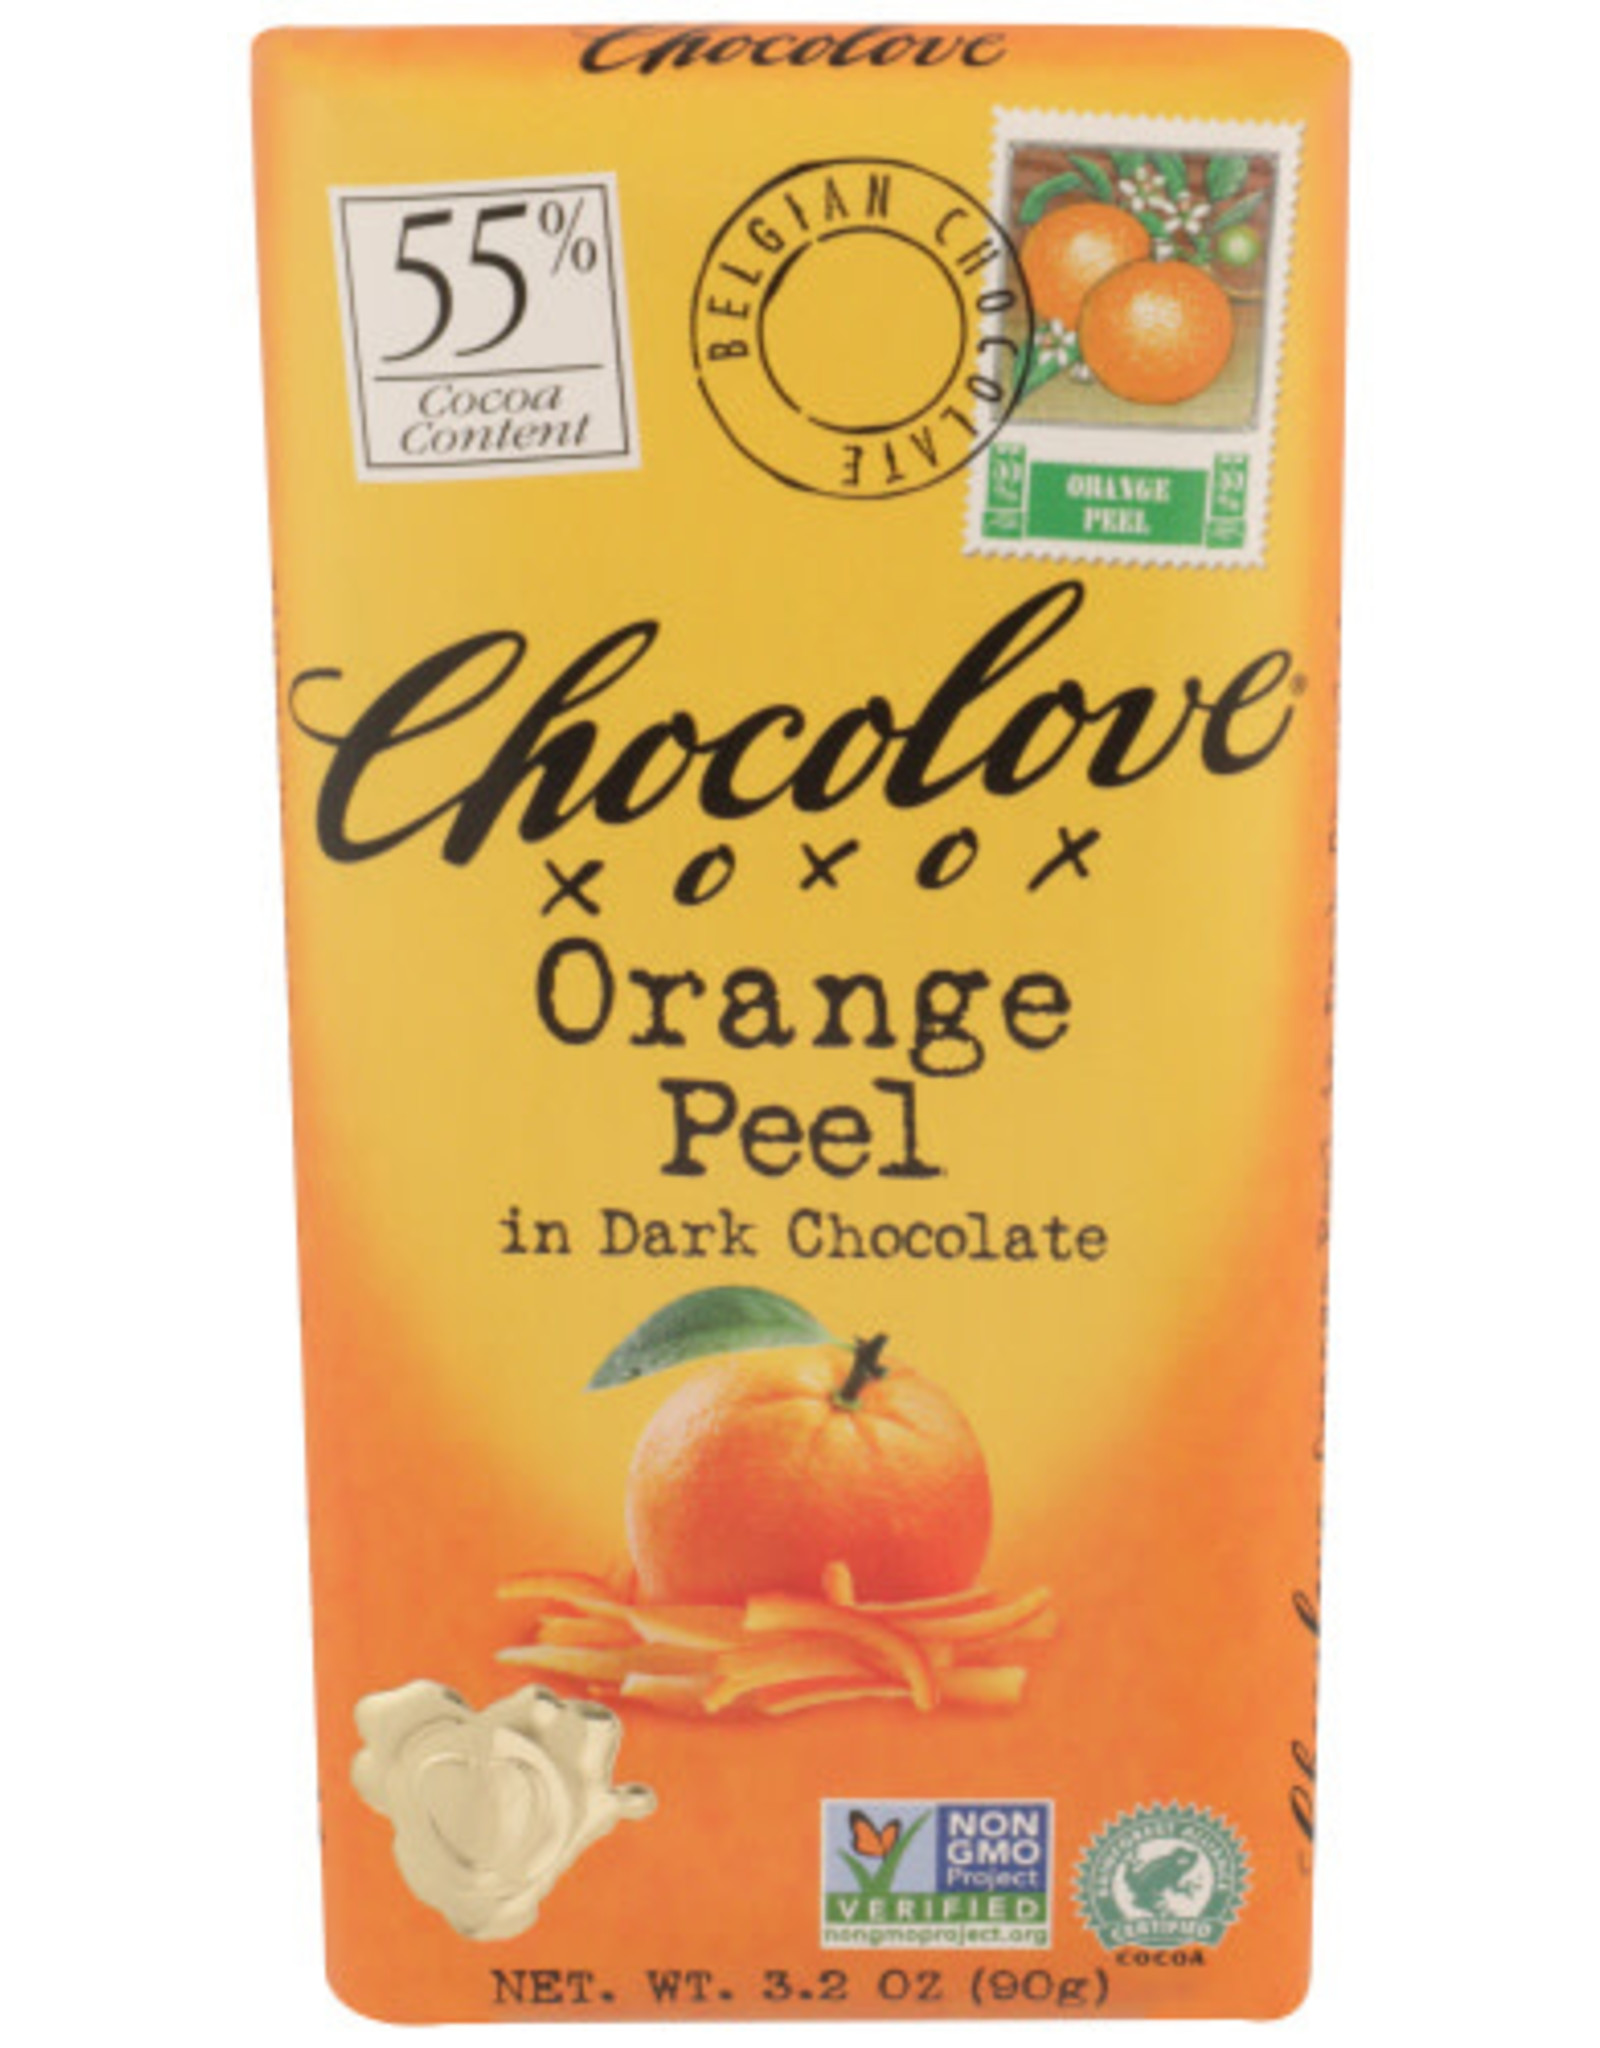 CHOCOLOVE® CHOCOLOVE ORANGE PEEL IN DARK CHOCOLATE , 3.2 OZ.